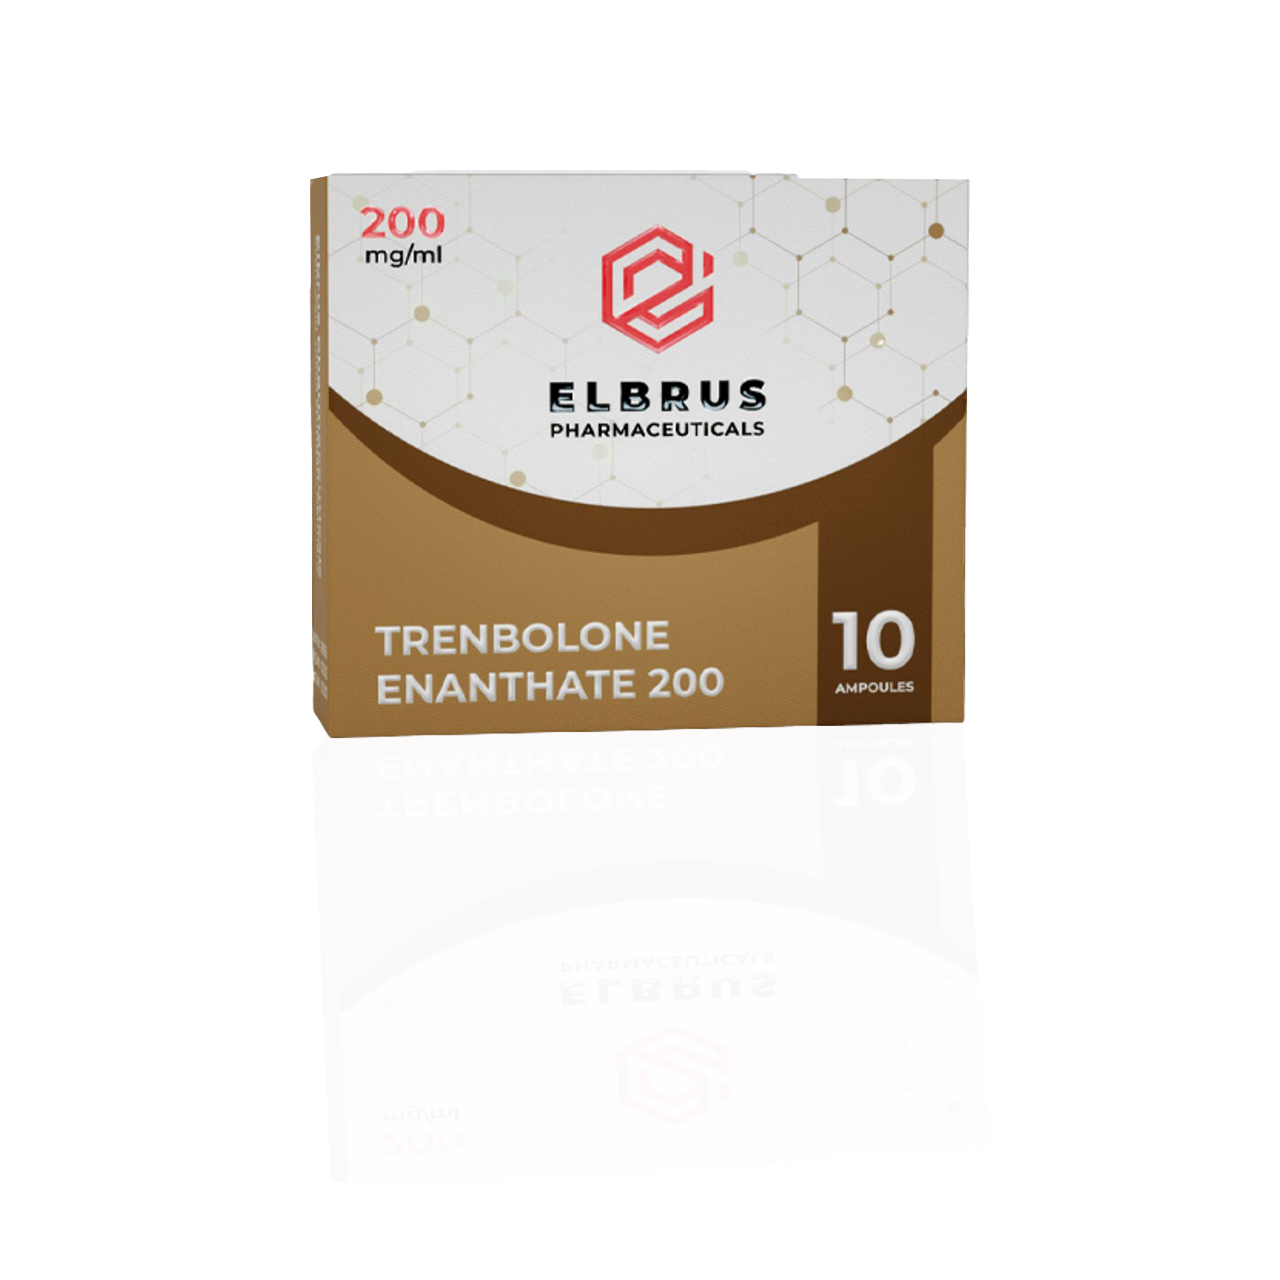 Trenbolone Enanthate 200 mg Elbrus Pharmaceuticals Iniezione di steroidi